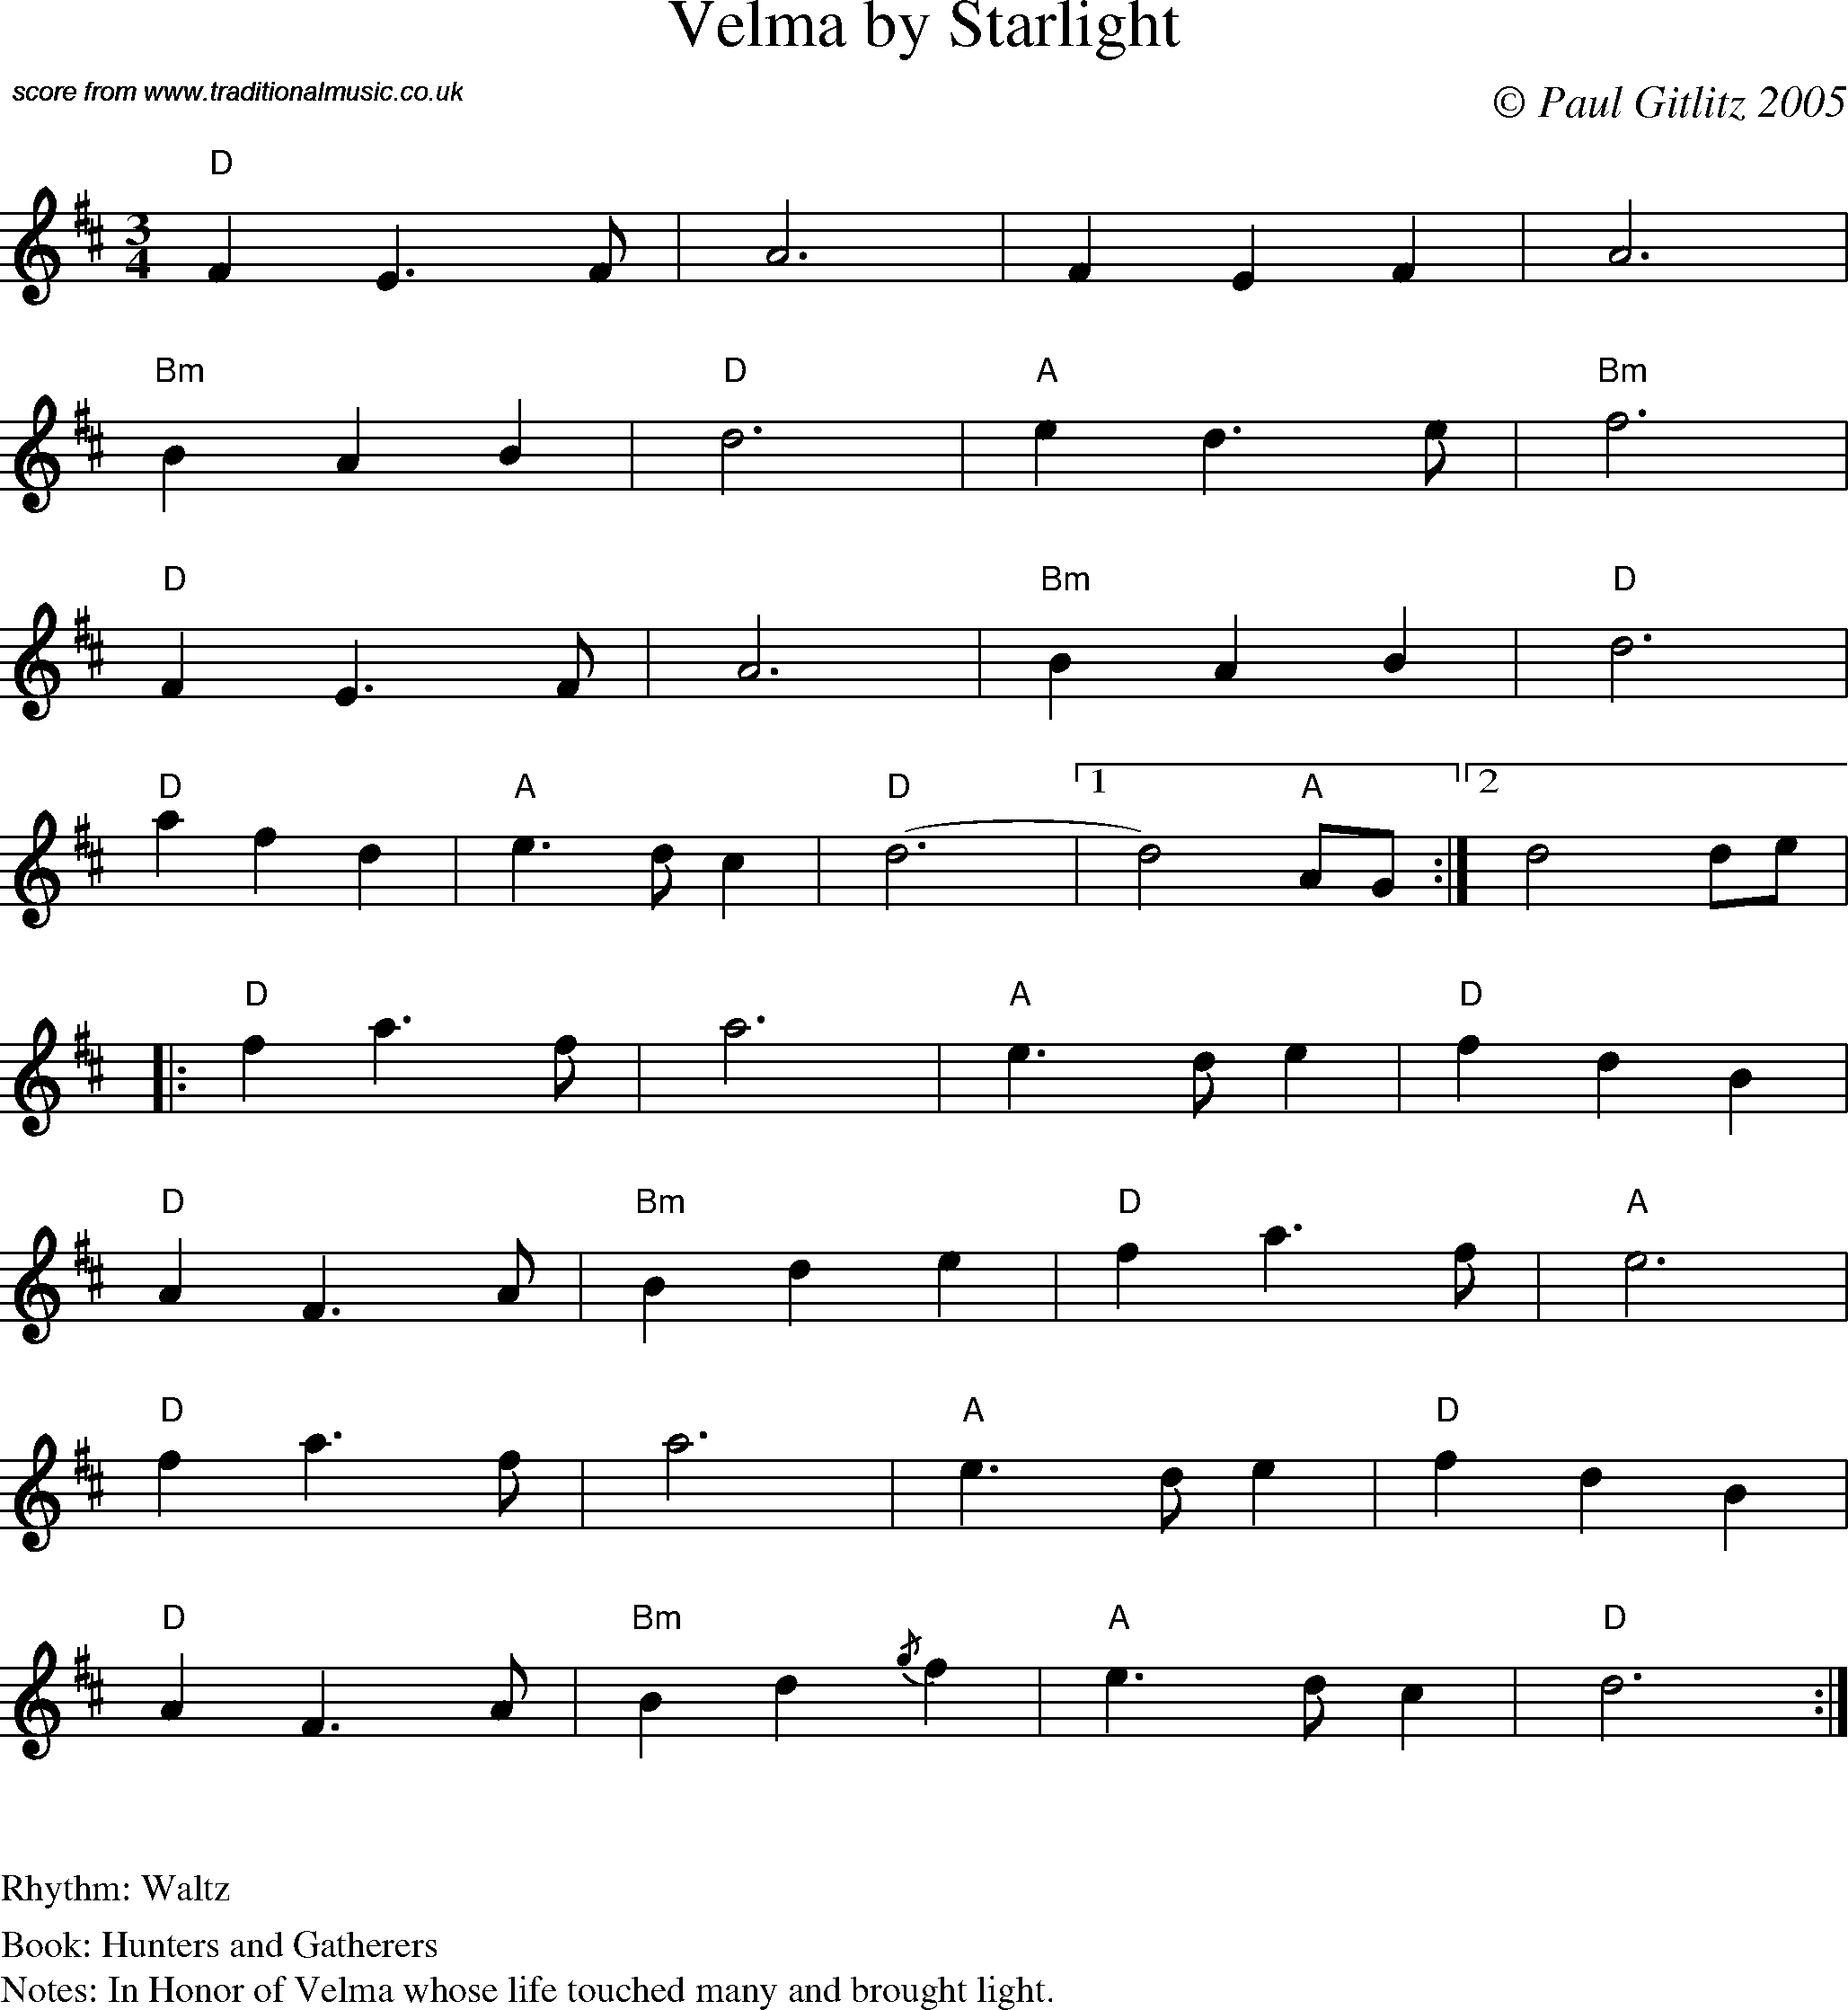 Sheet Music Score for Waltz - Velma by Starlight